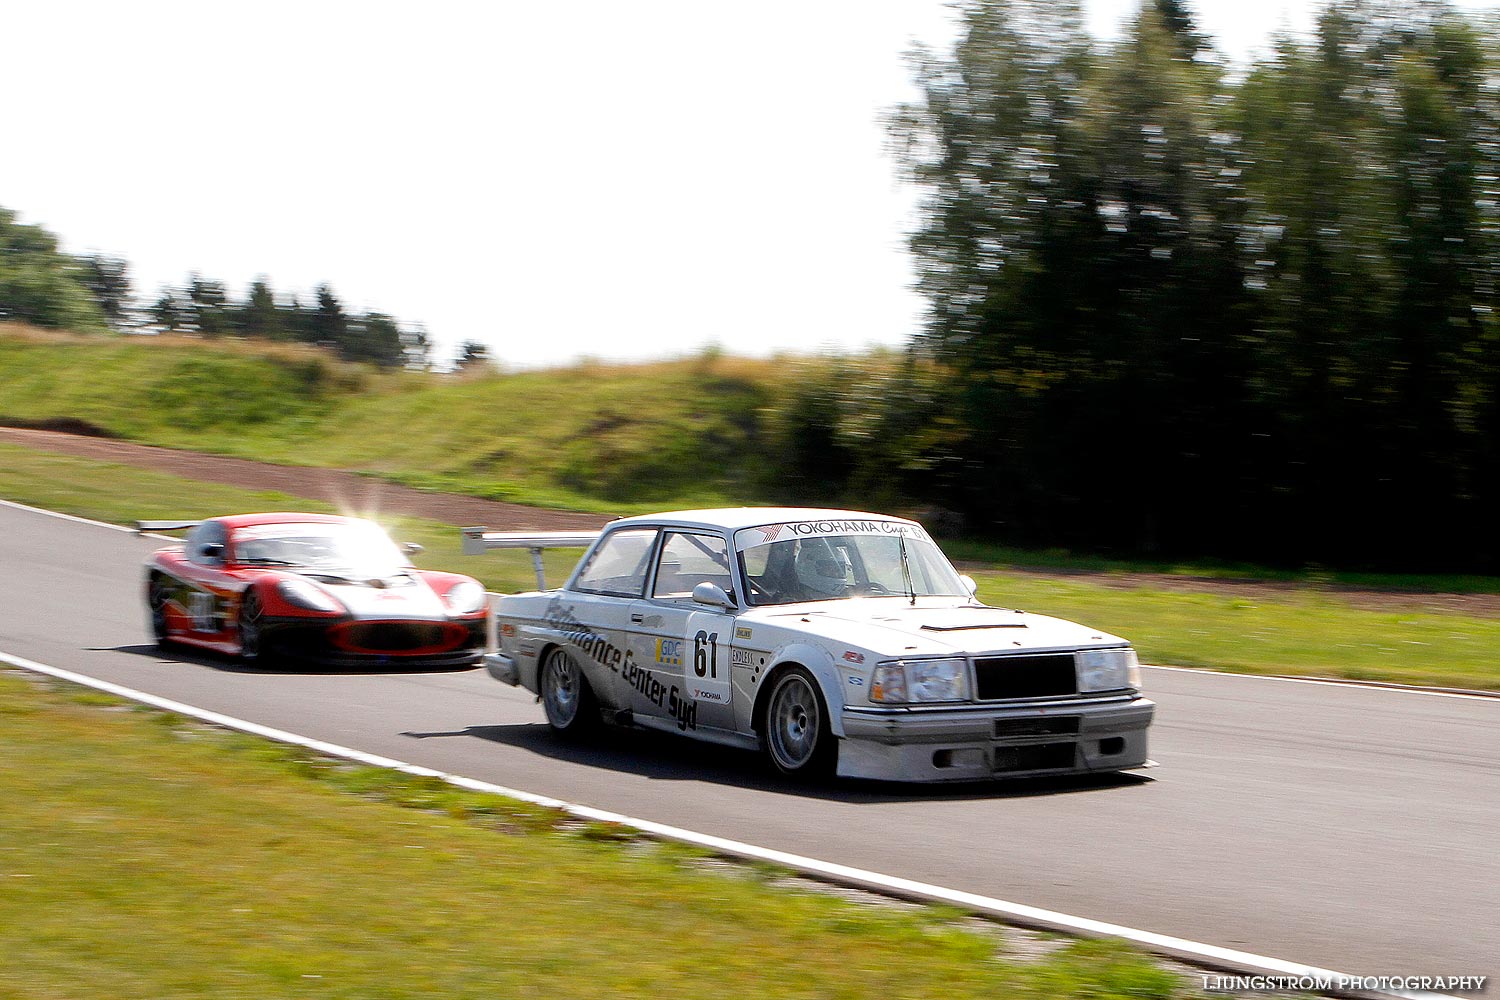 SSK Raceweek,mix,Kinnekulle Ring,Götene,Sverige,Motorsport,,2014,90392